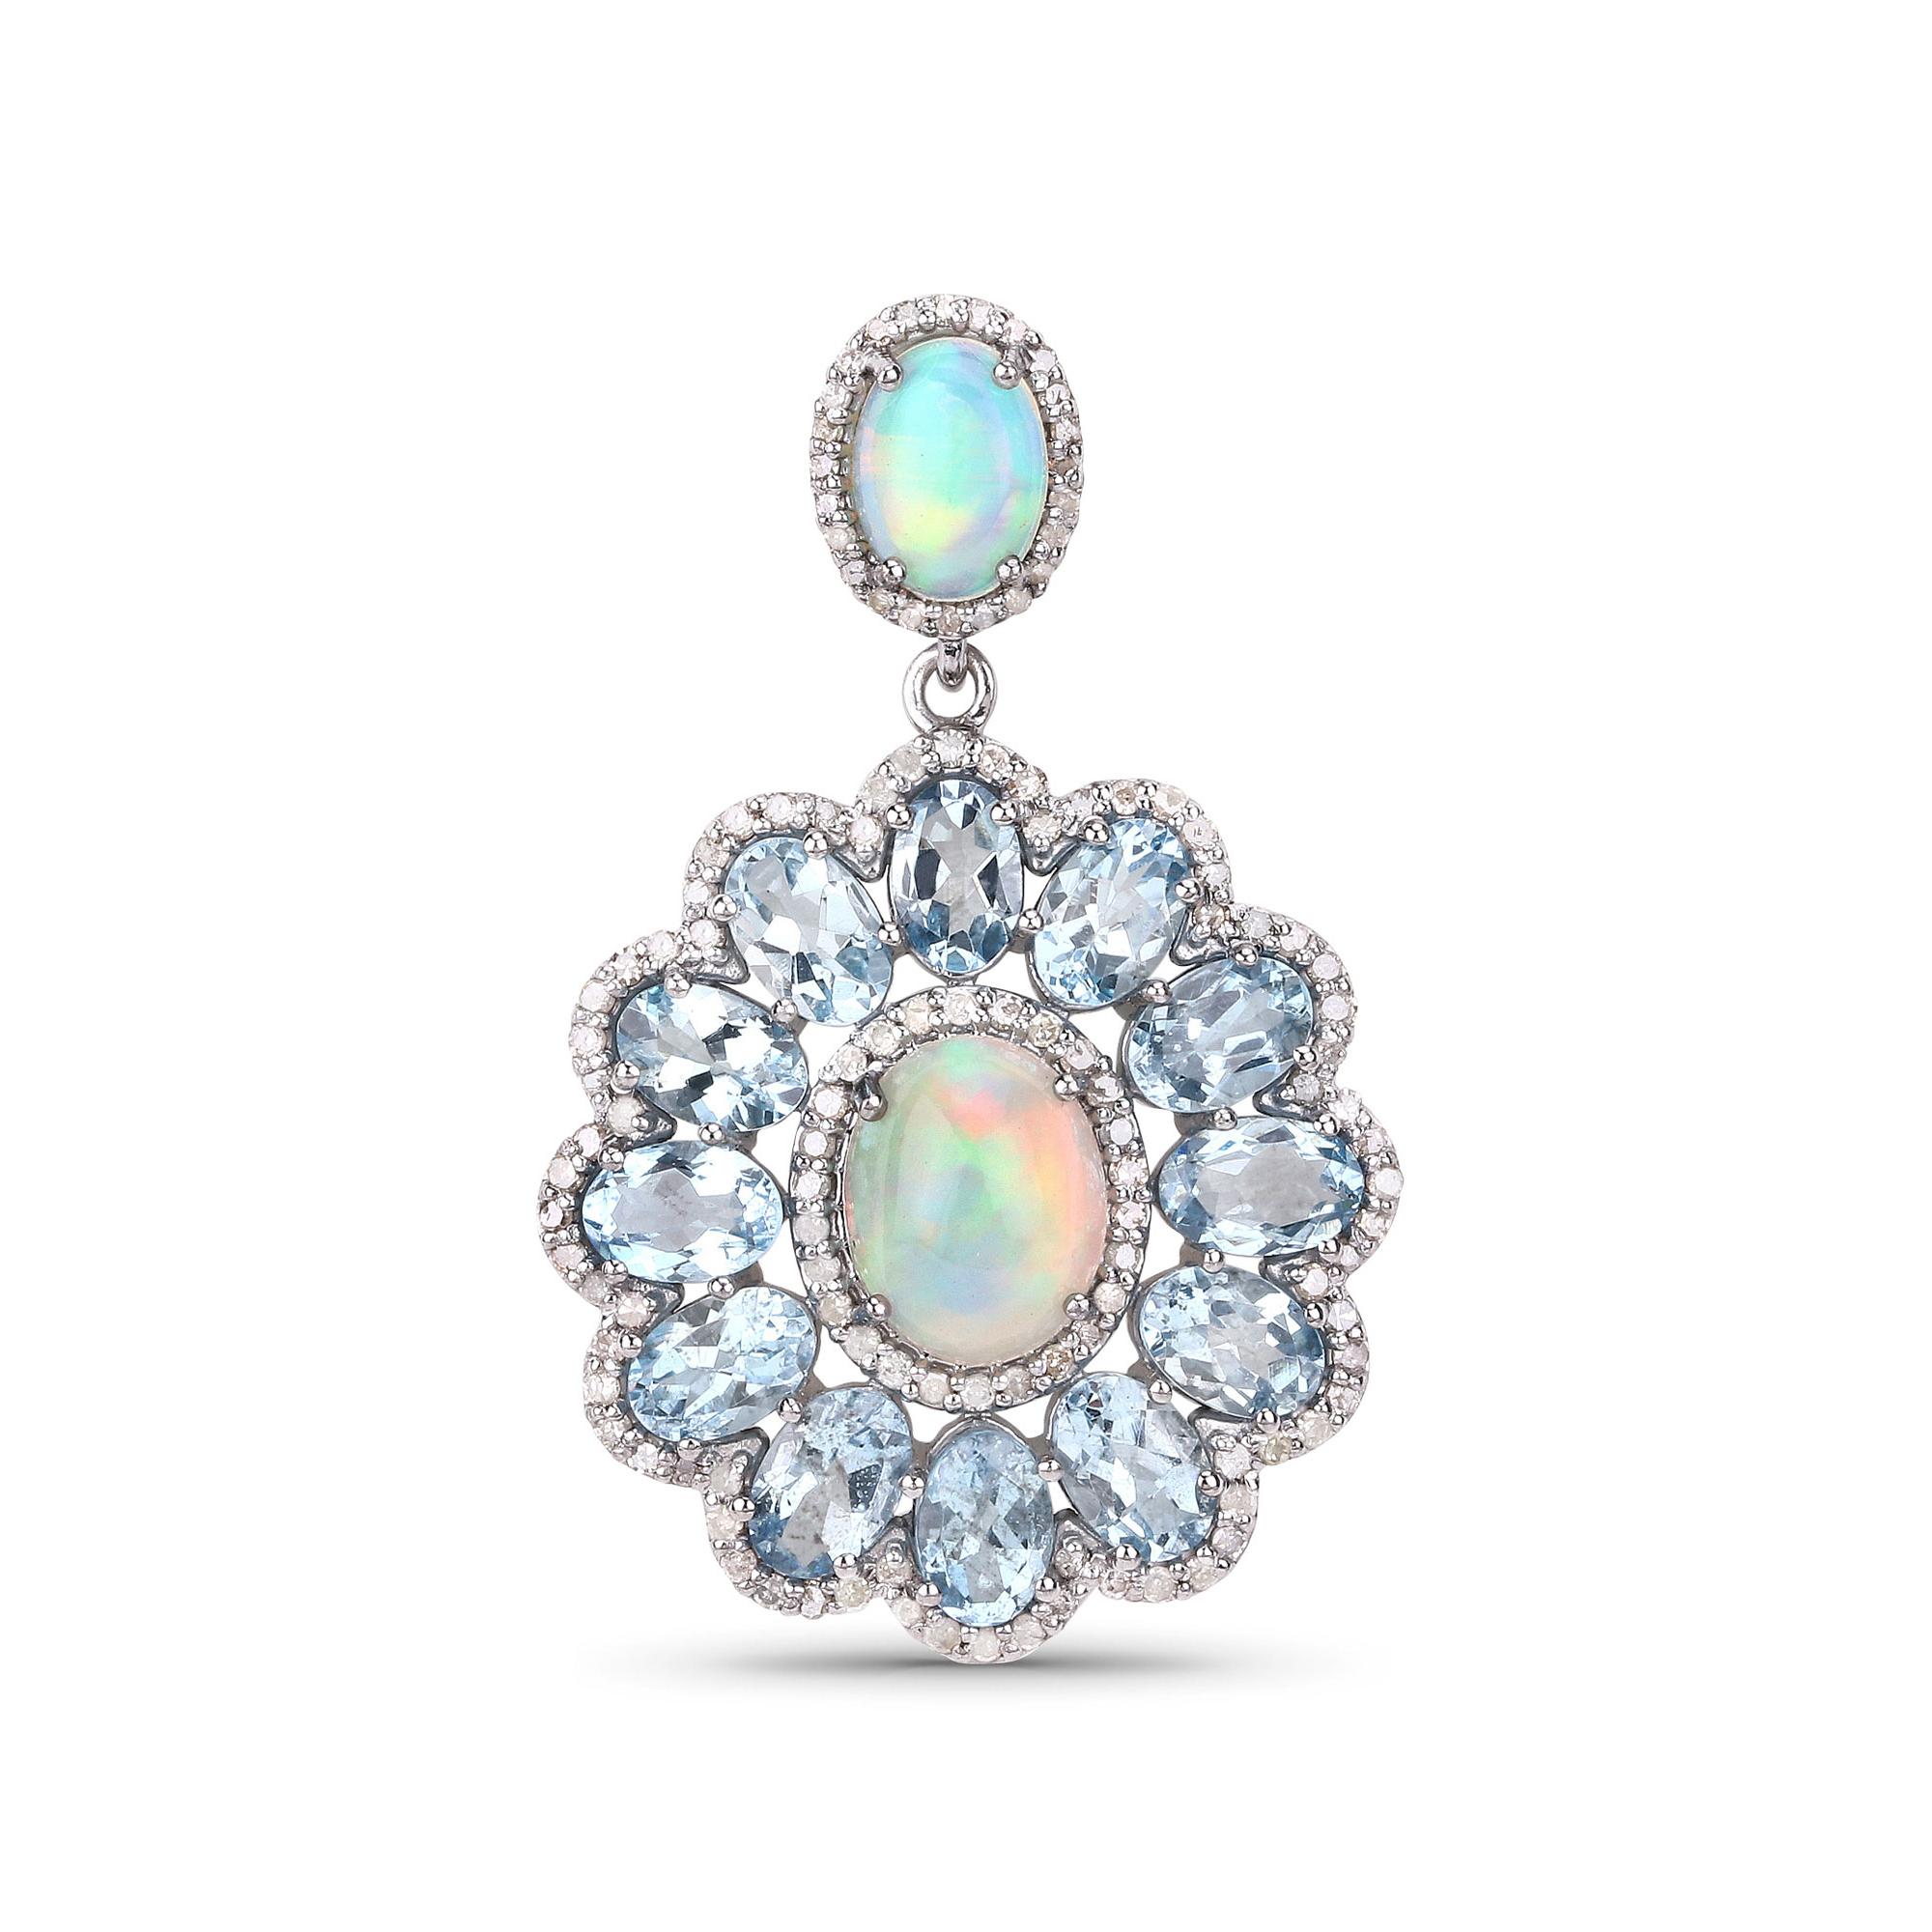 Mixed Cut Aquamarine Opal Dangle Earrings Diamond Setting 16.27 Carats Total For Sale